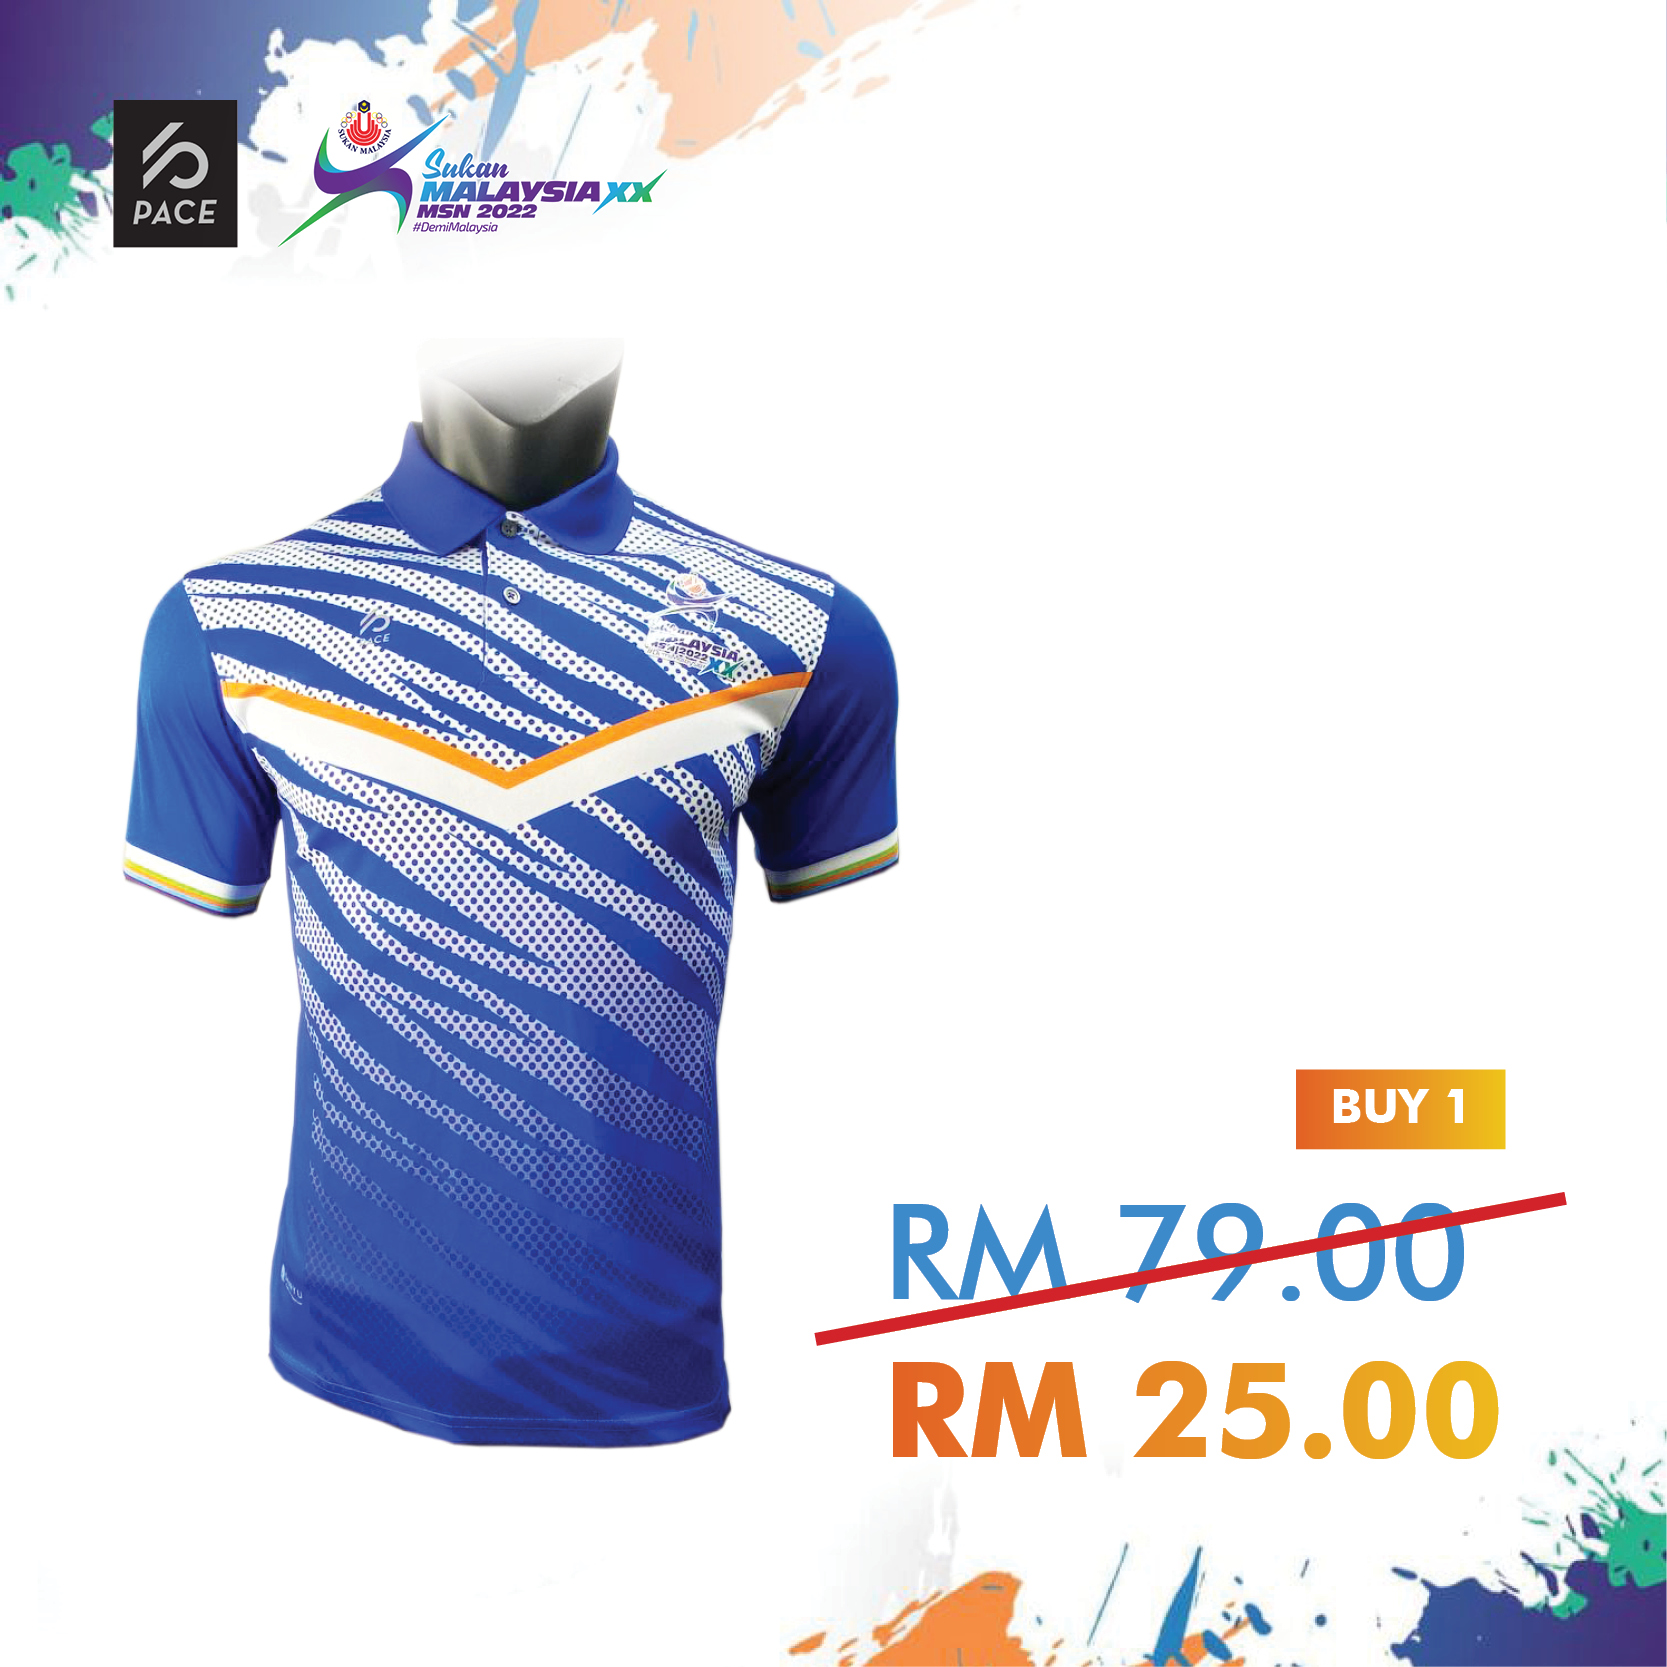 ROYAL BLUE POLO SHIRT SPORT COLLAR  T-SHIRT - Sukan Malaysia XX MSN 2022 SUKMA 20P810